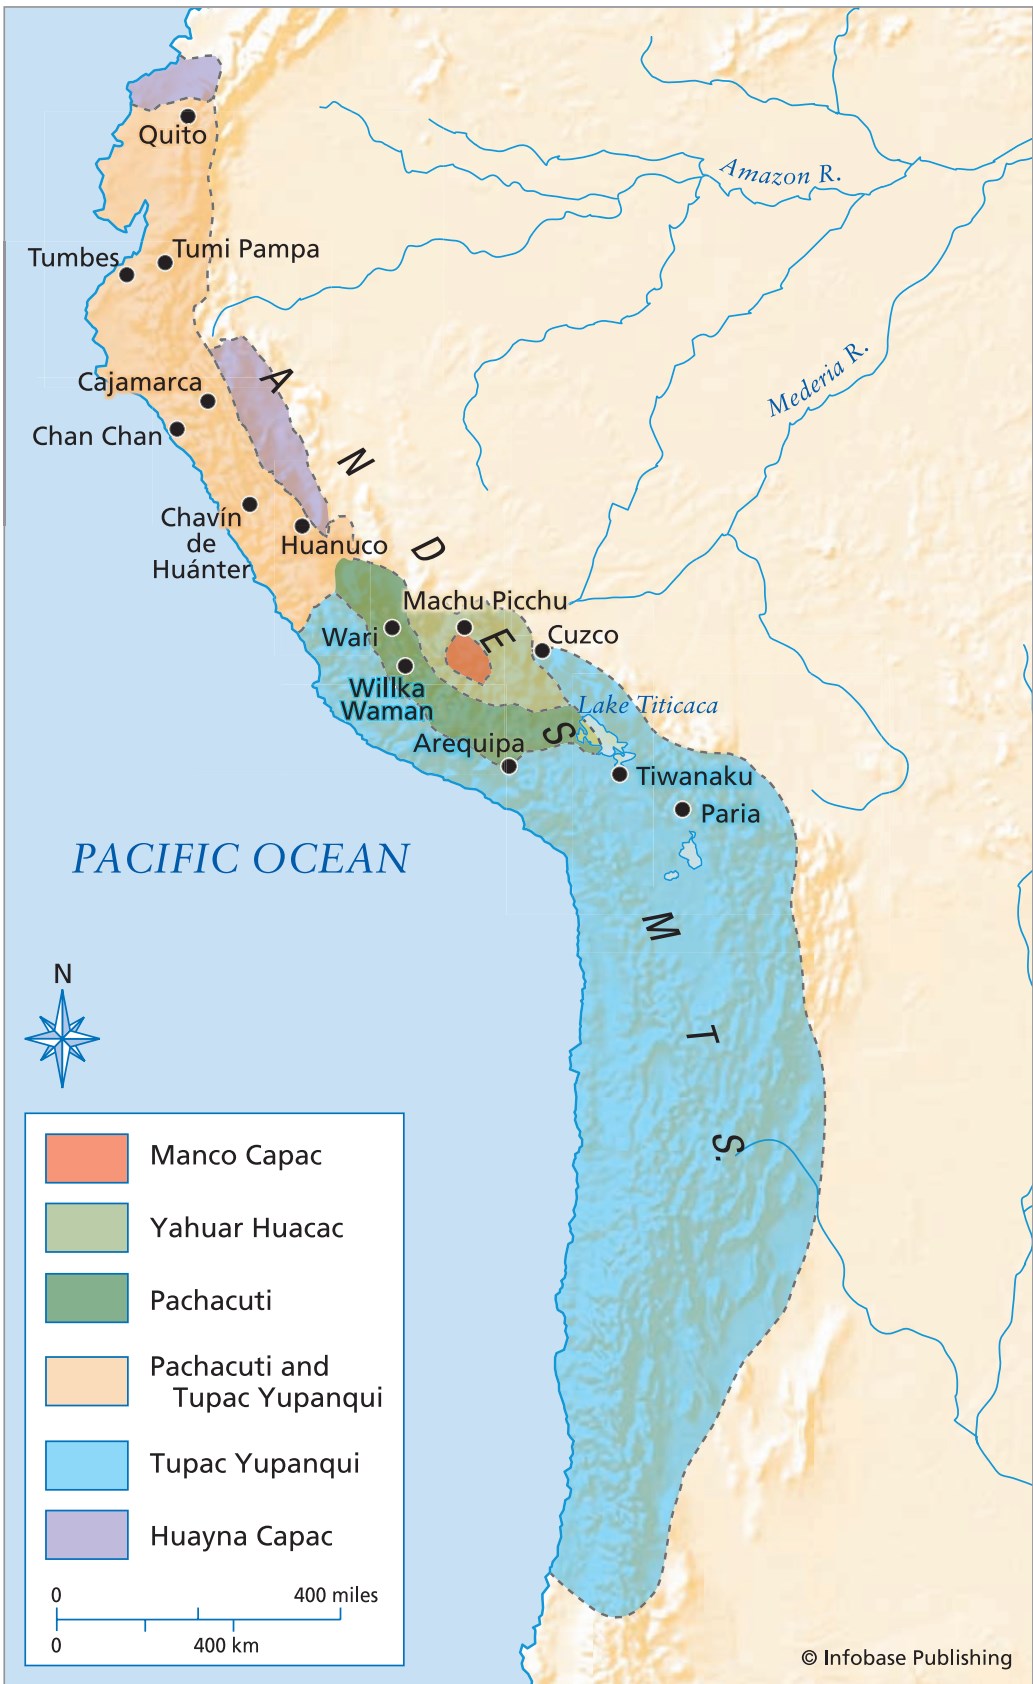 The Great Inca Rebellion II